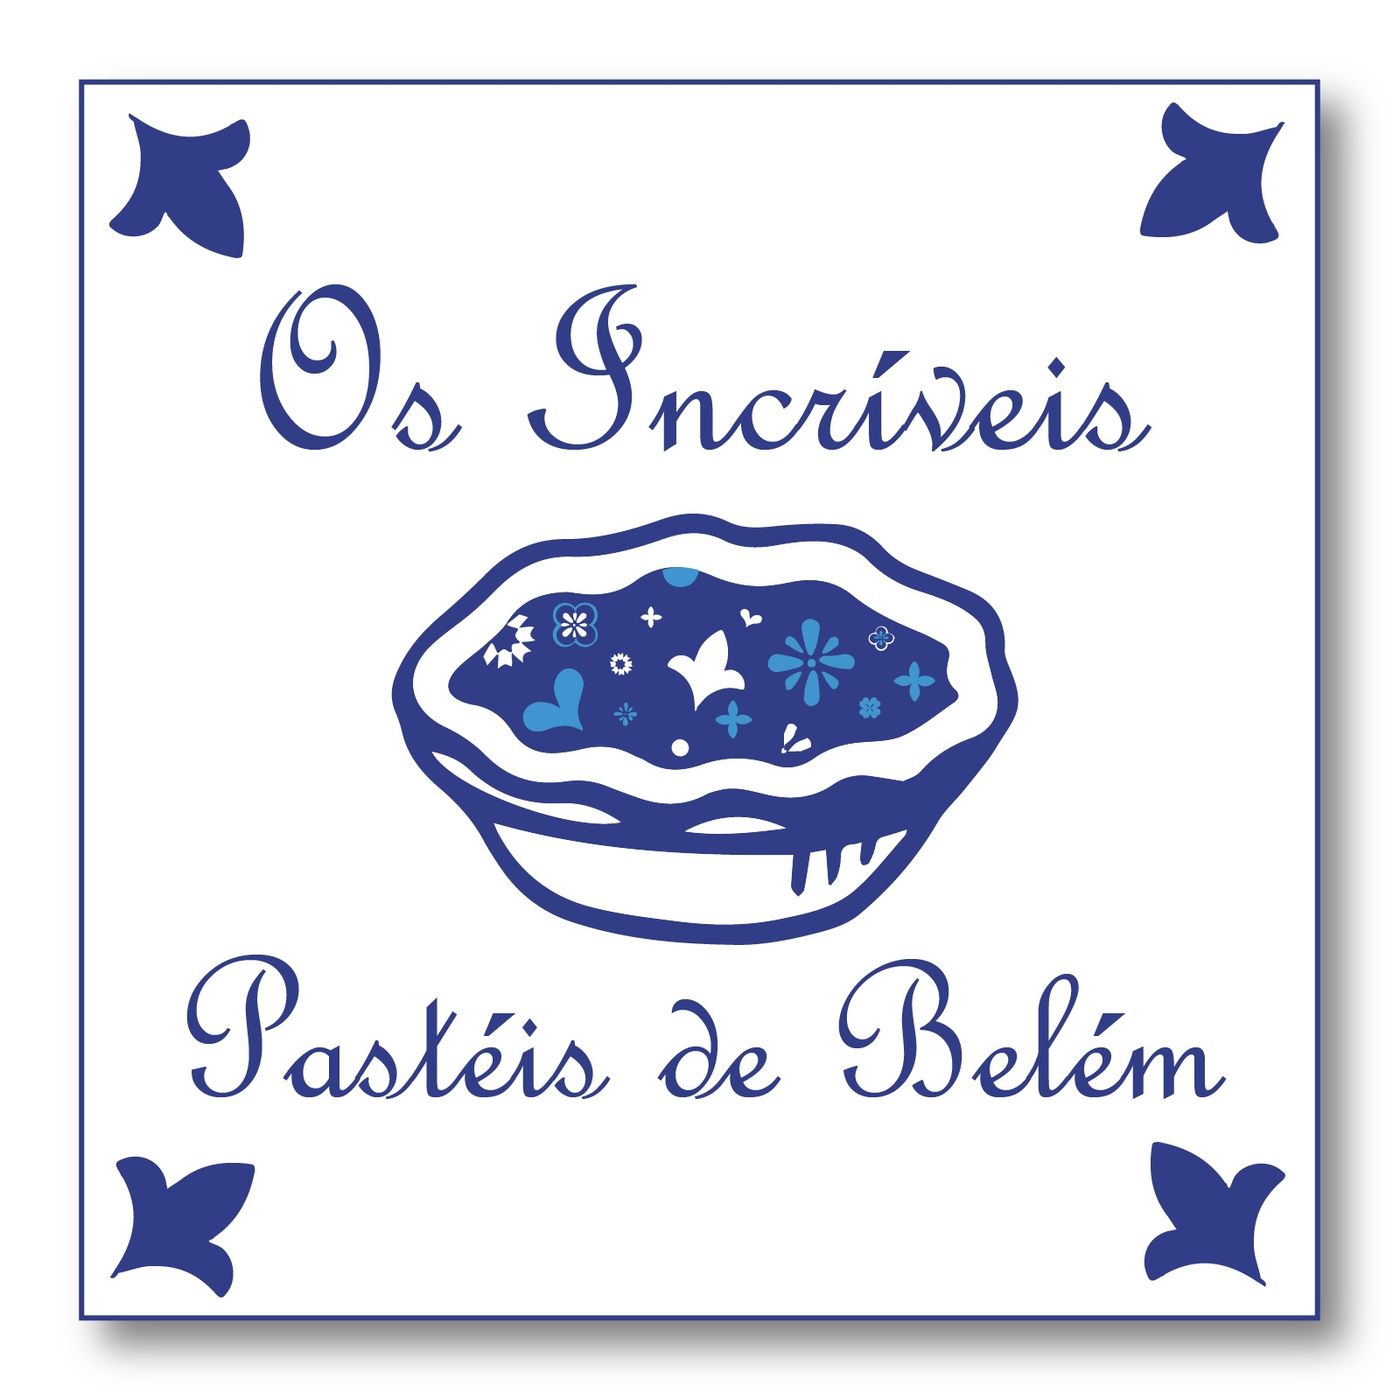 #006 - Os incríveis pastéis de Belém!